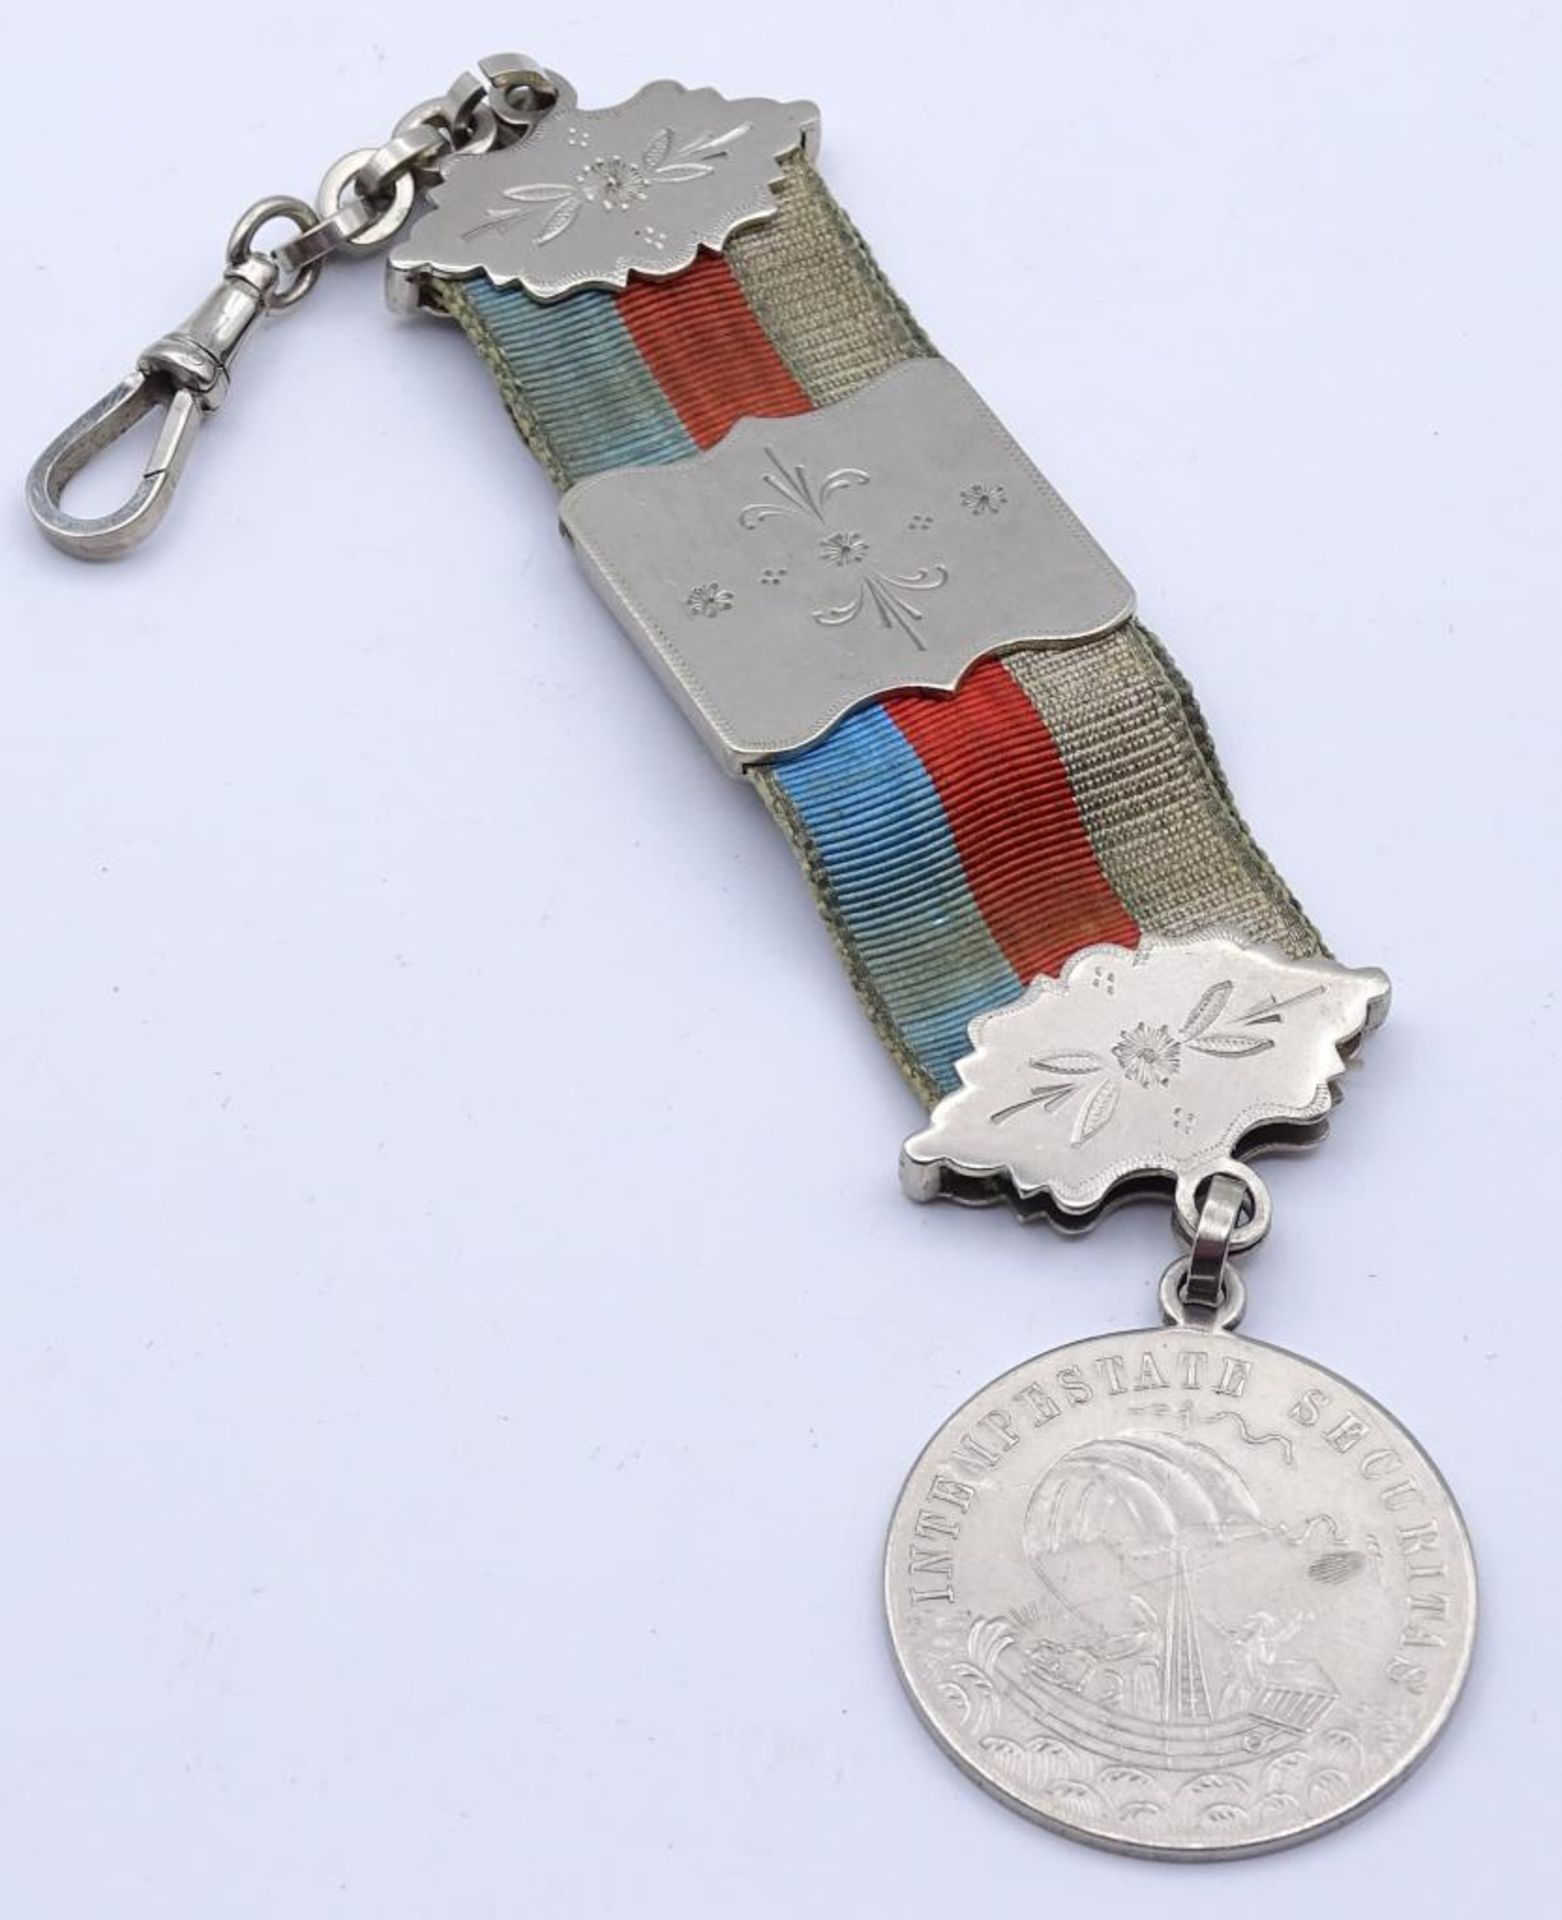 Studenenzipfel mit Medaille "in tempestate securitas",1896- - -22.61 % buyer's premium on the hammer - Bild 3 aus 4